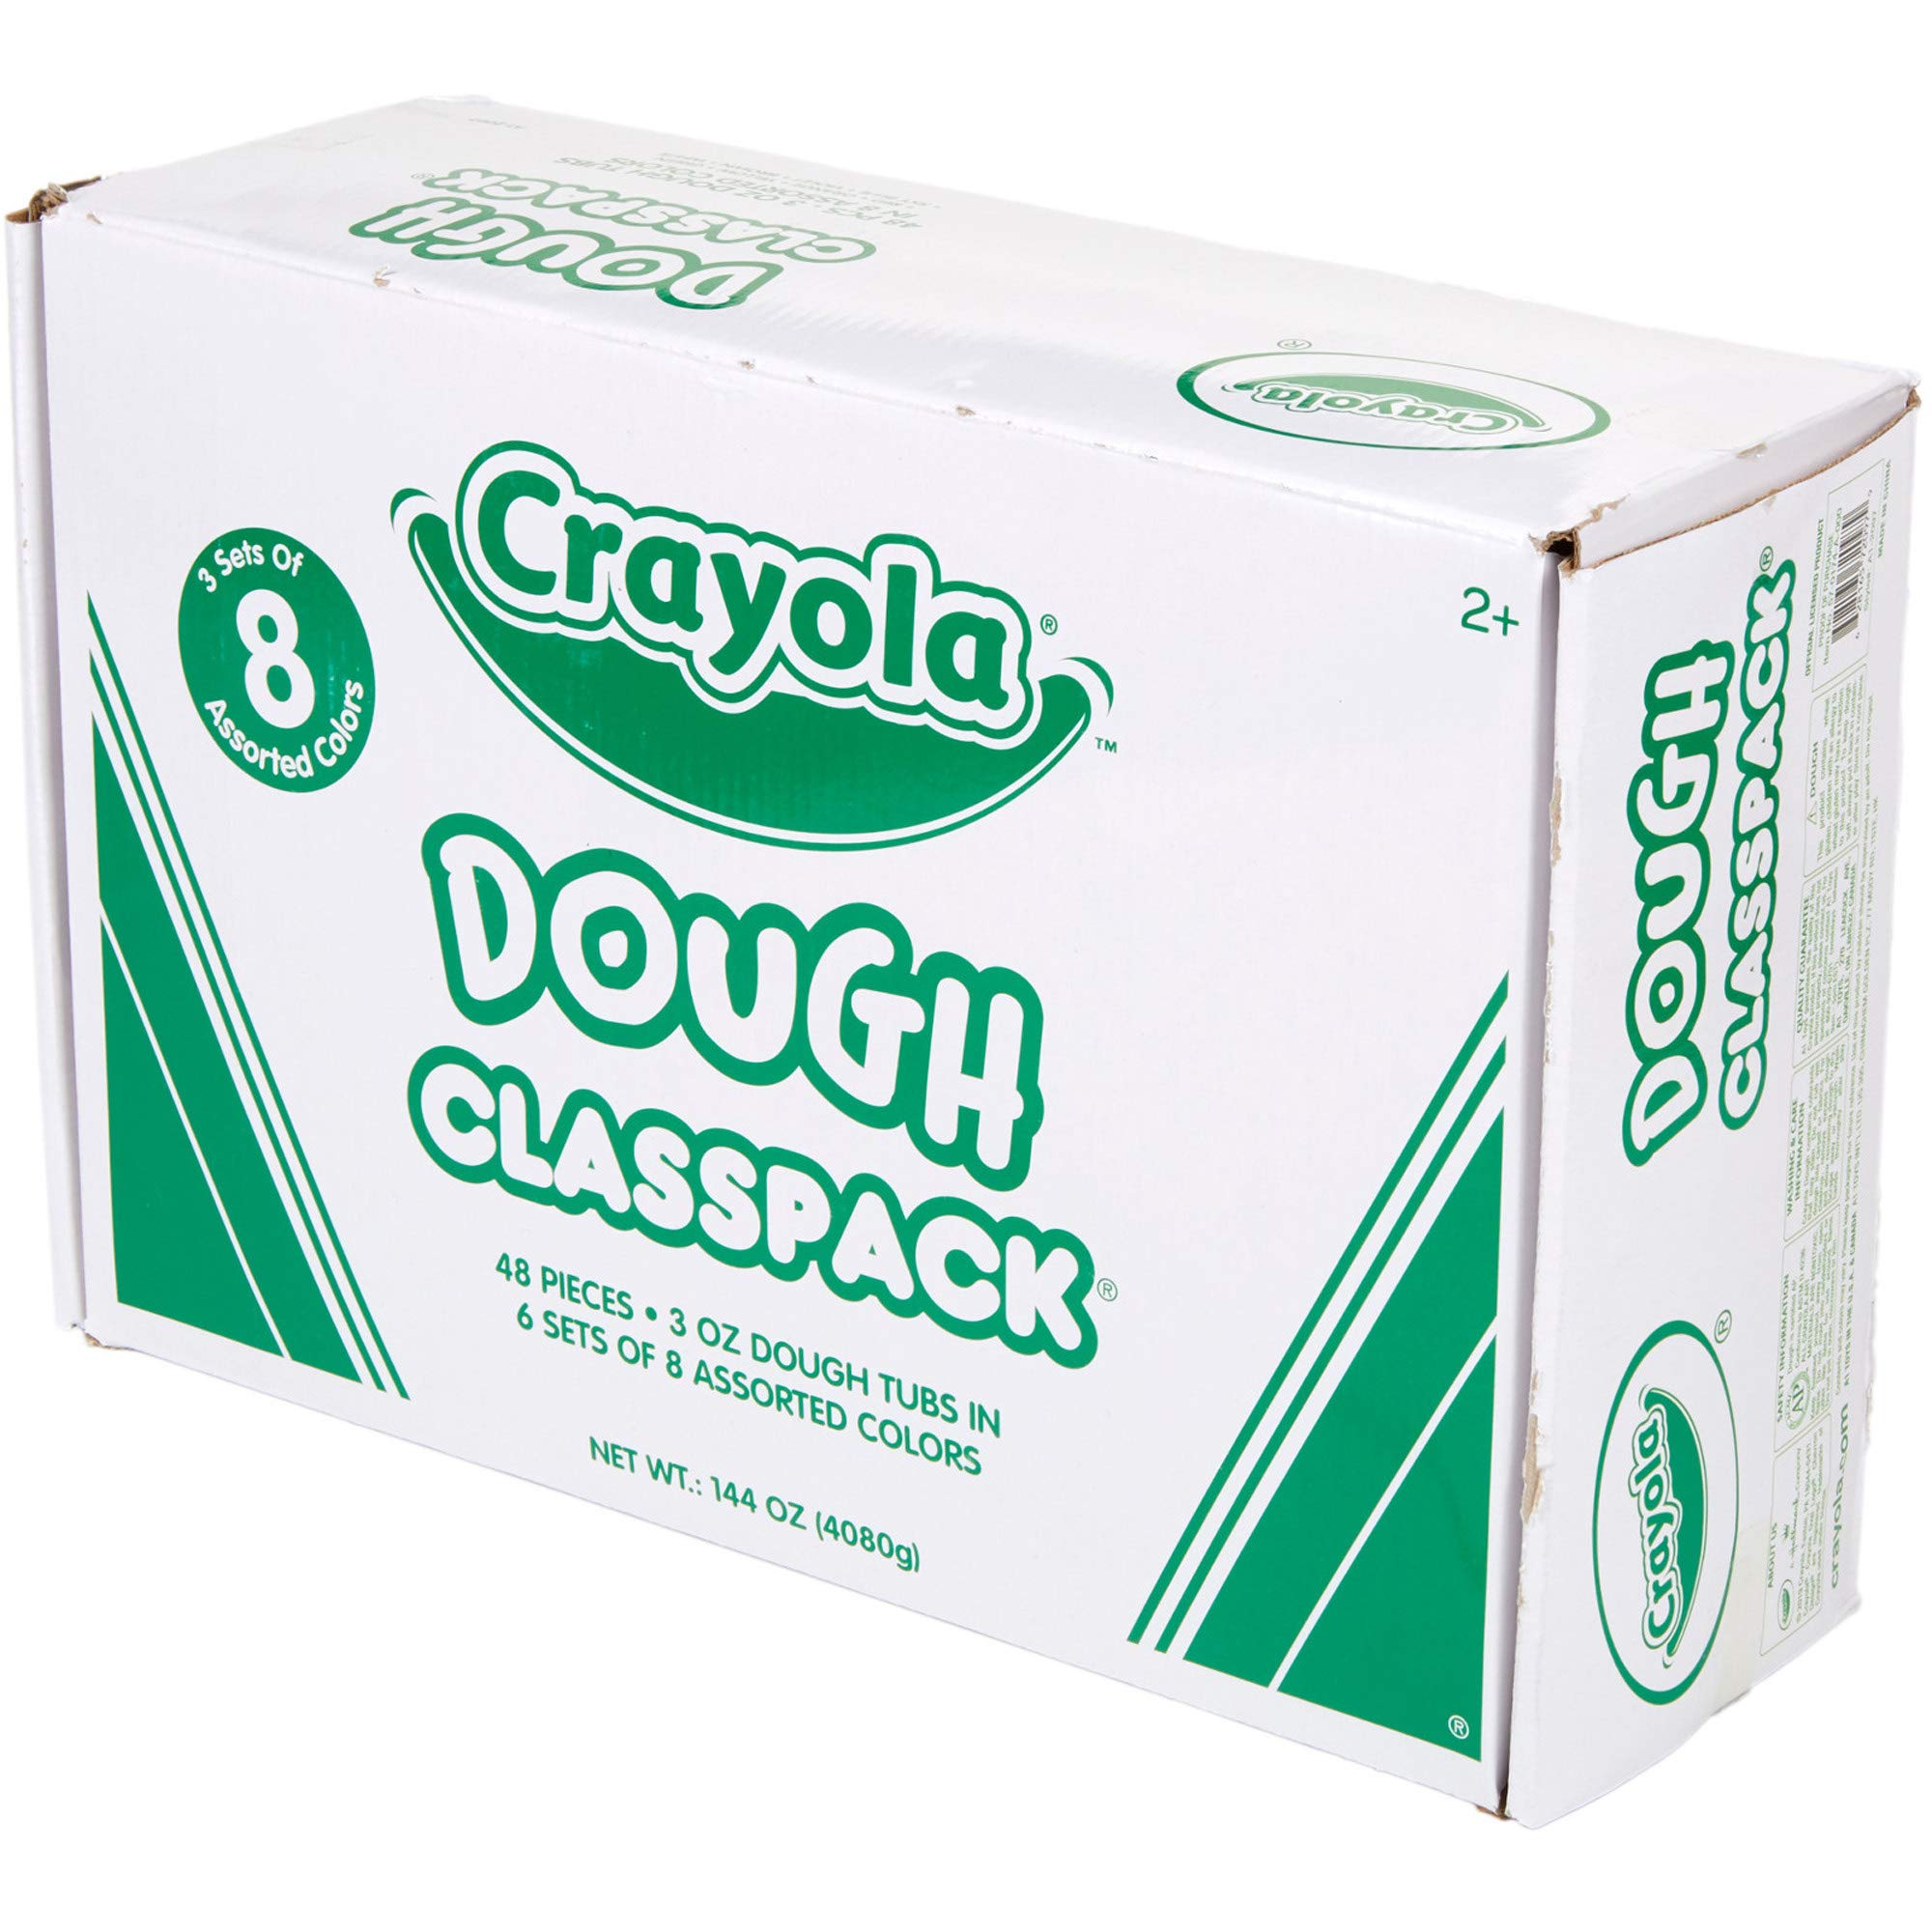 Crayola Dough Classpack, 3oz Each, 48 Count, 8 Assorted Colors per Carton (570174)